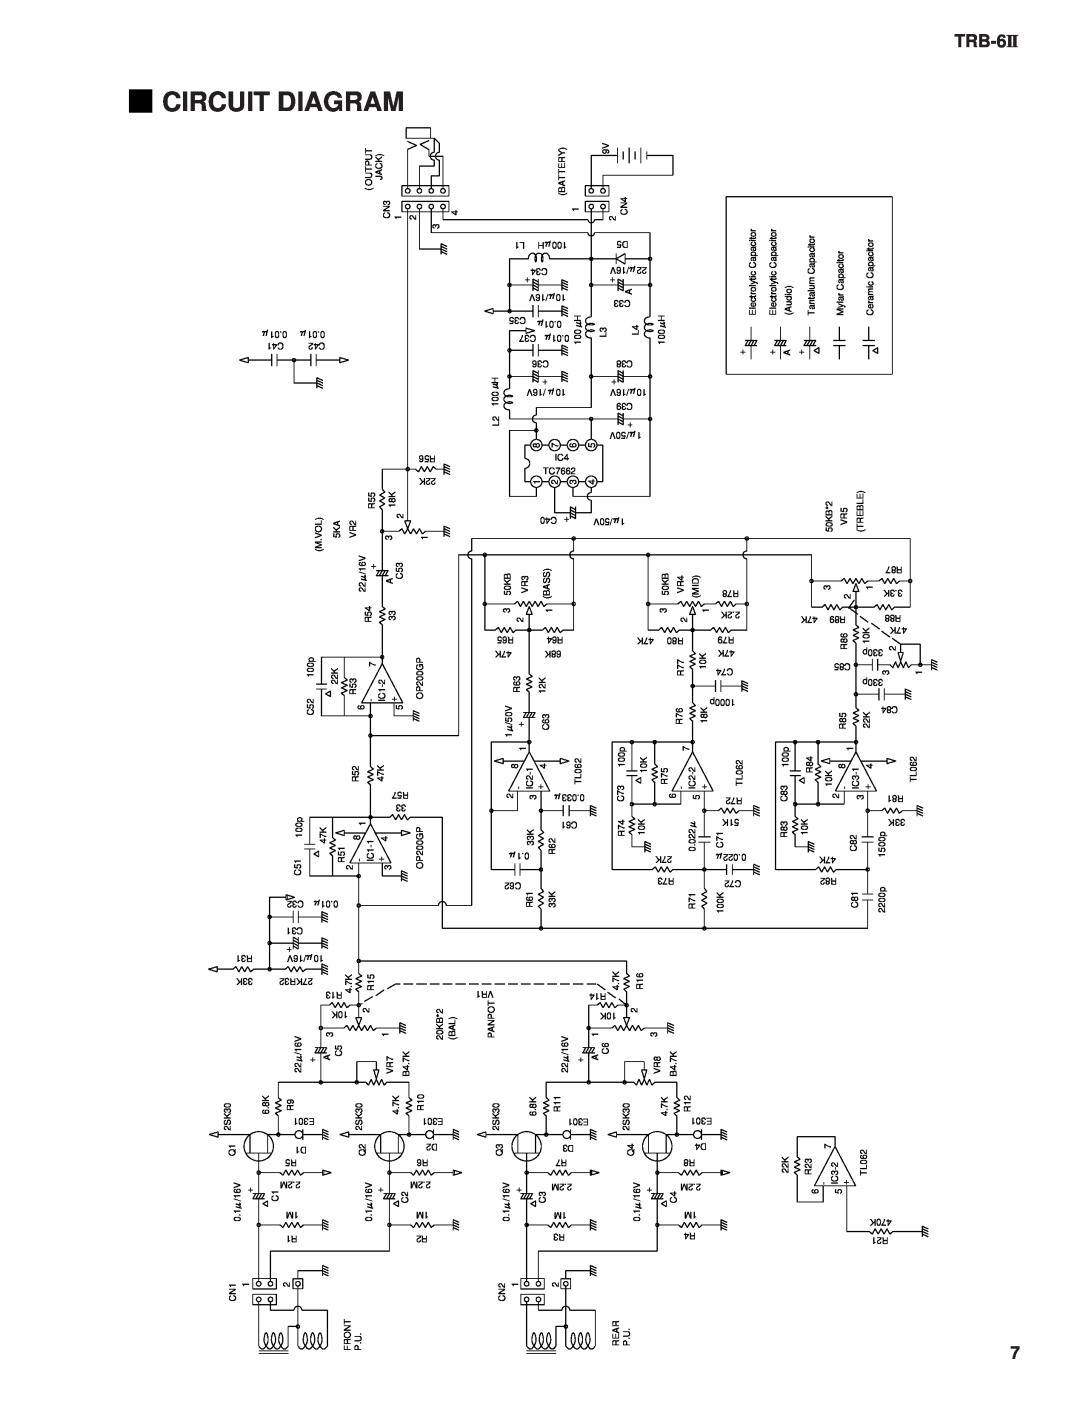 Yamaha 11391, ELECTIC BASS TRB-6 2 service manual Circuit Diagram, TRB-6II, IC12, IC2-1, IC3-1 + 